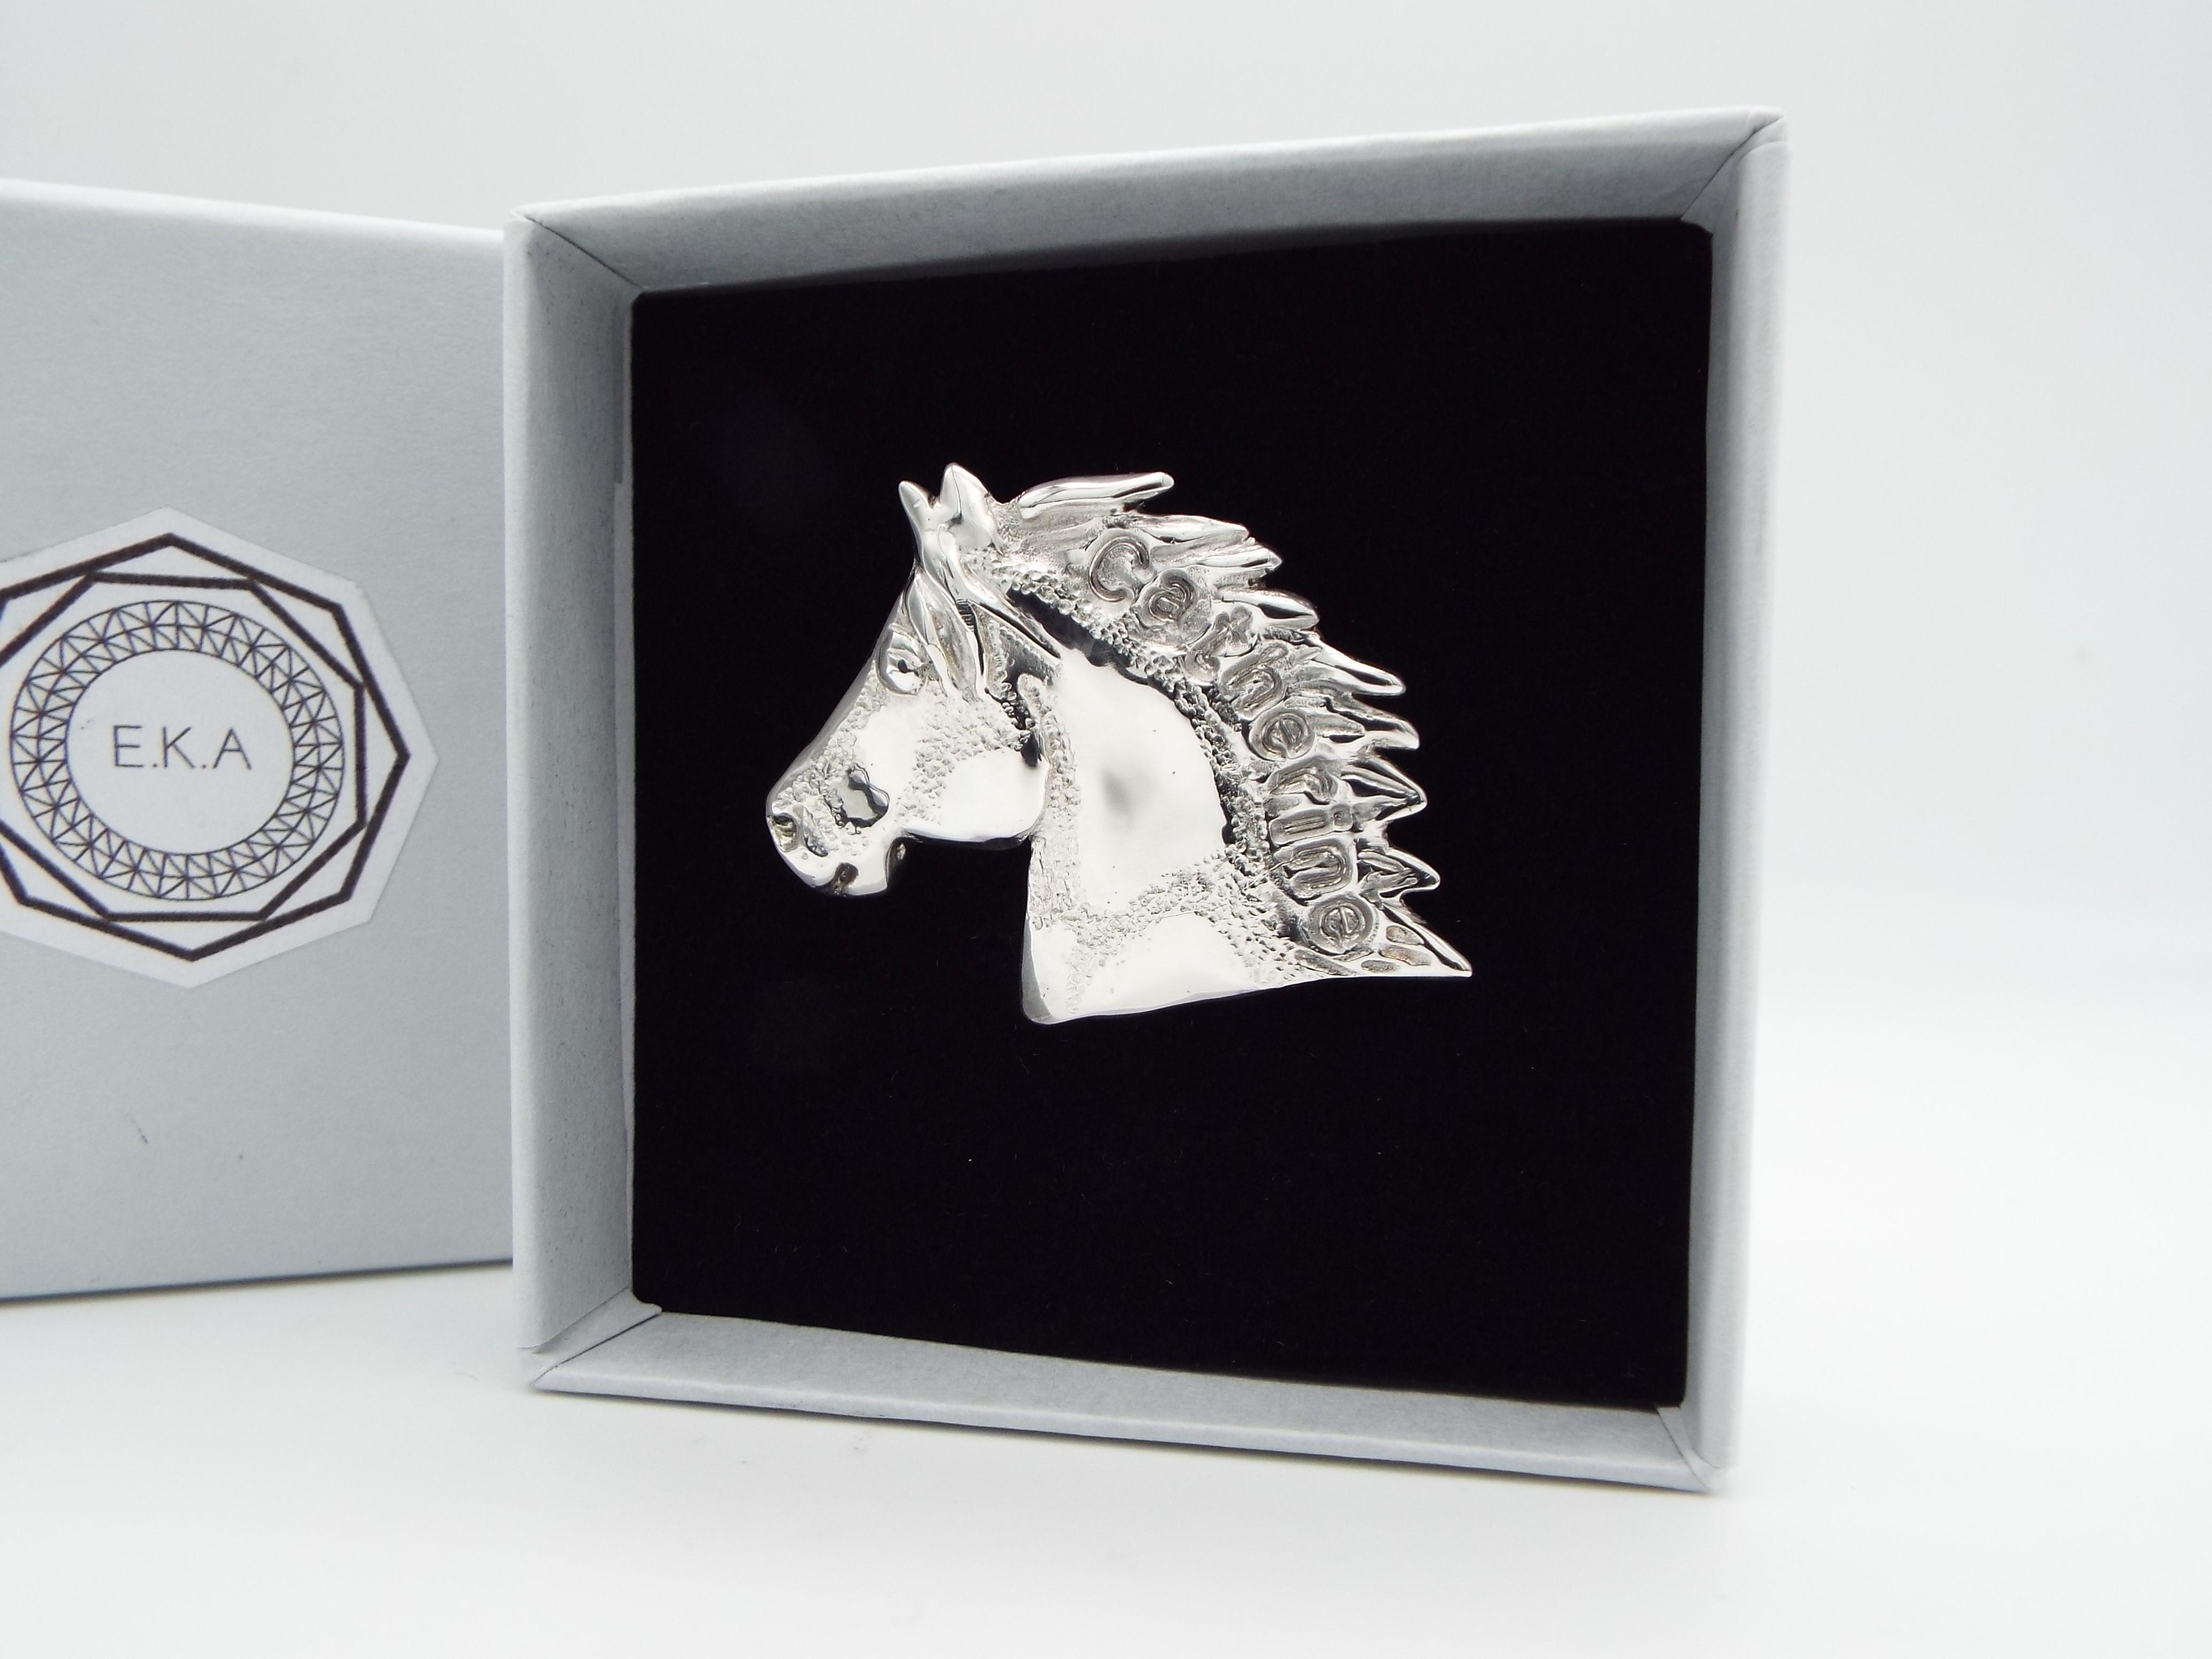 Horse Head brooch - Cast in sterling silver